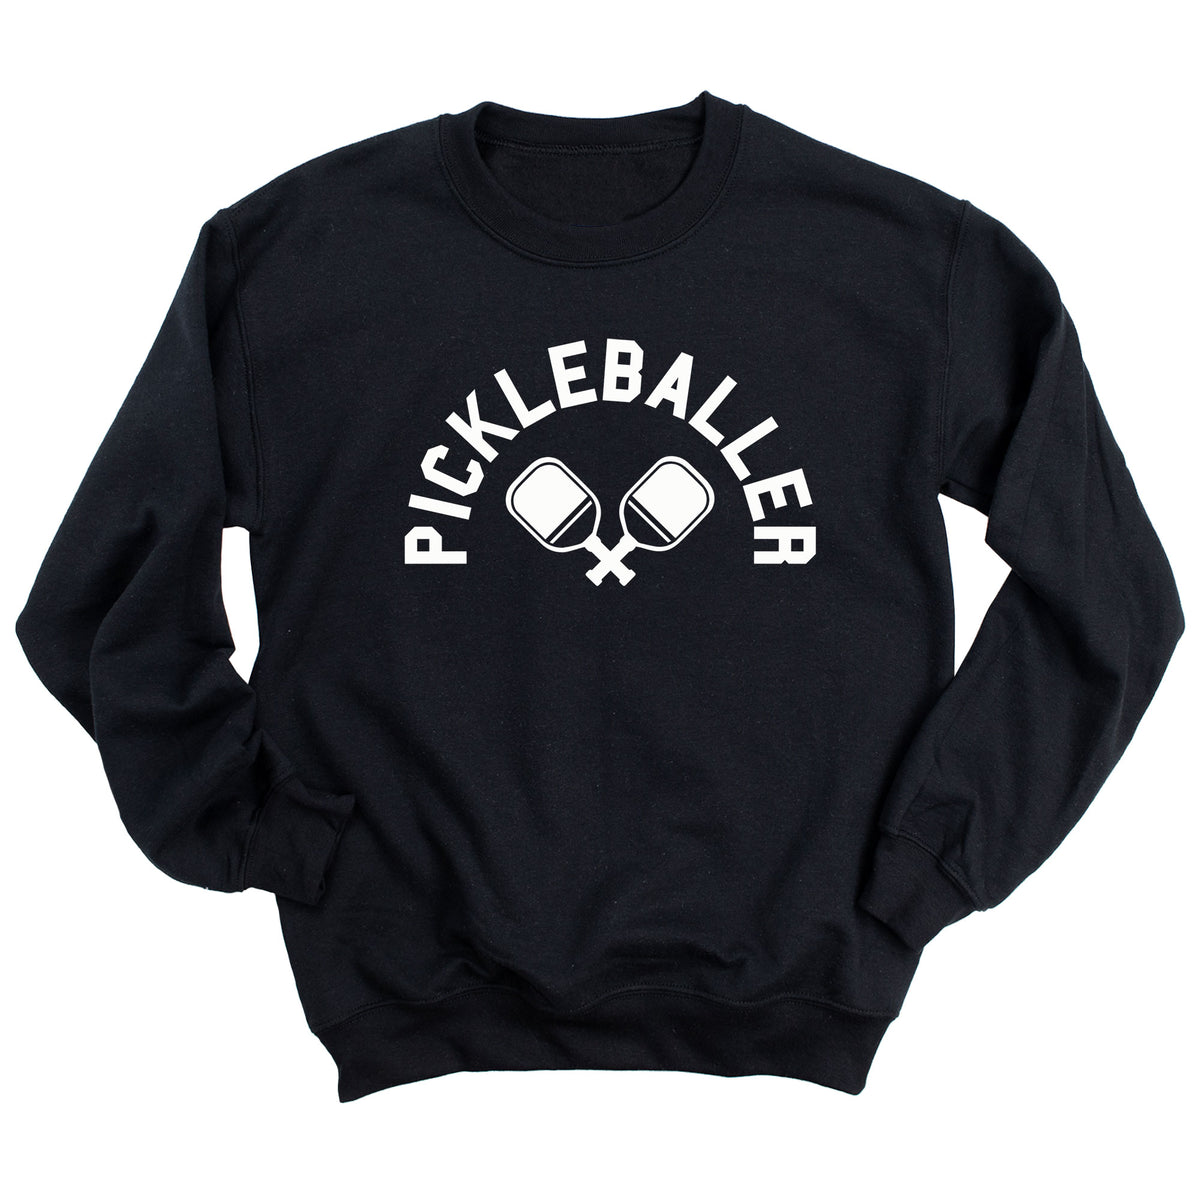 Pickleballer with Paddles Sweatshirt